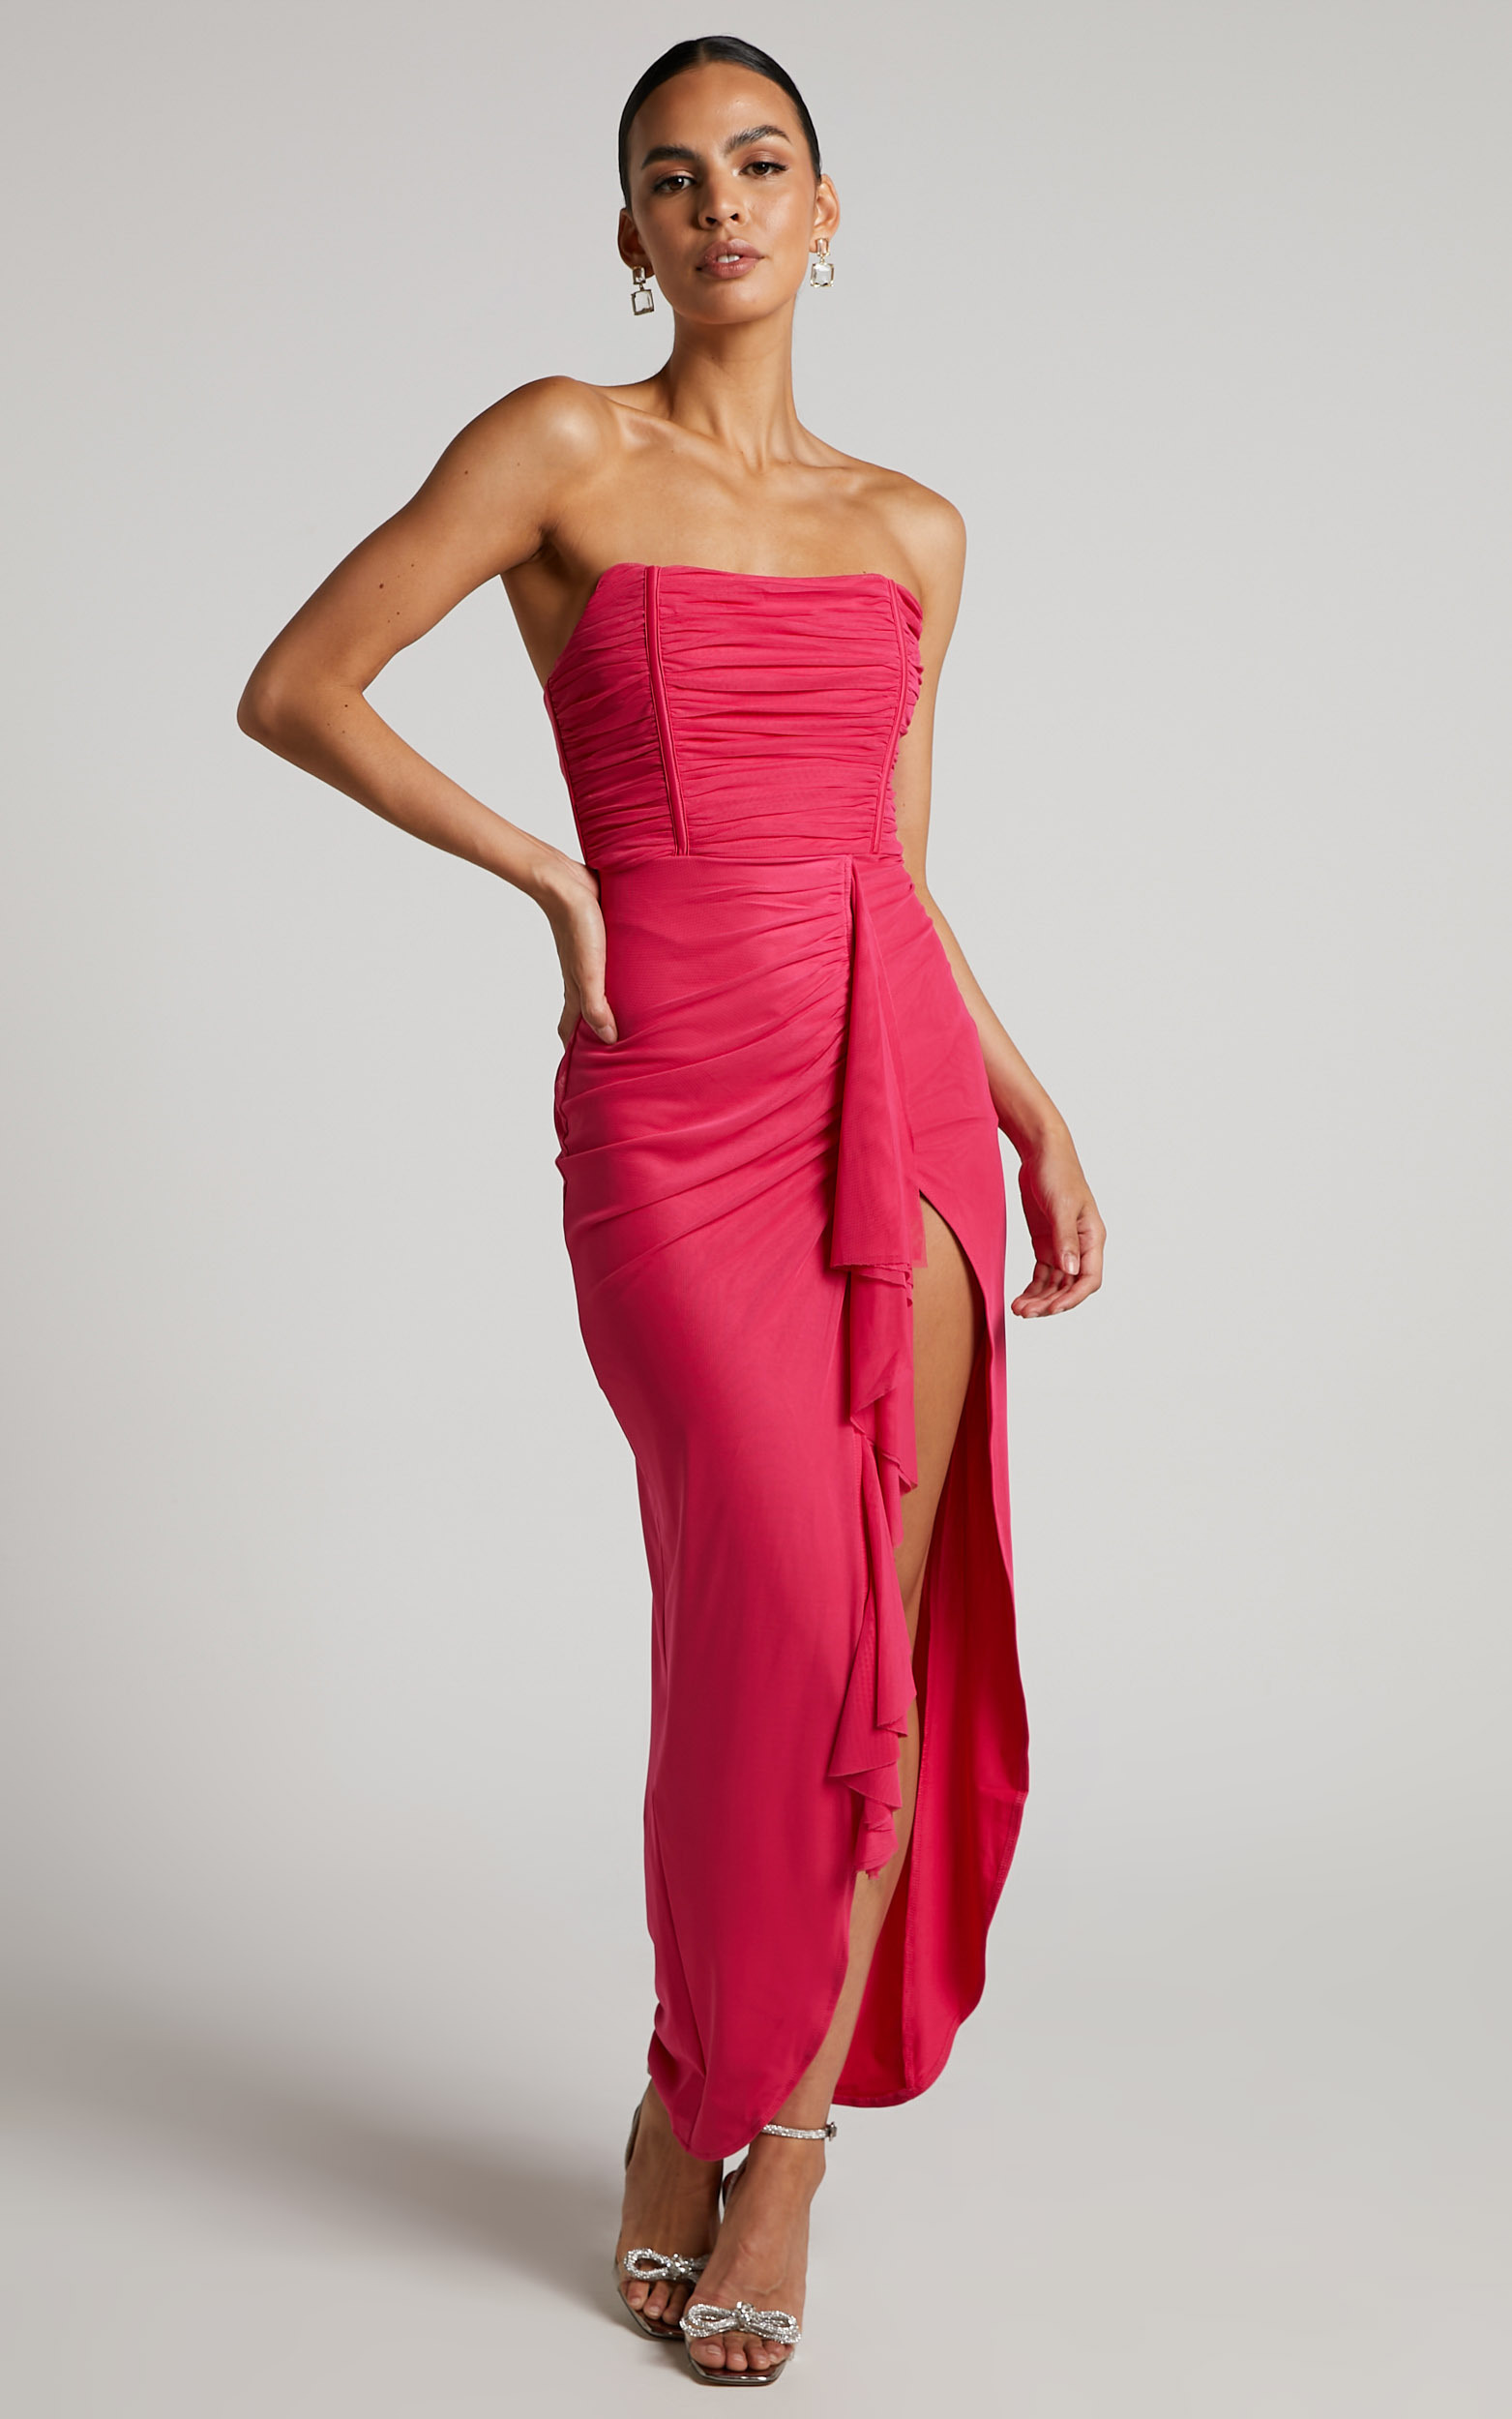 Nora Corset Detailing Dress in Hot Pink - 04, PNK1, hi-res image number null